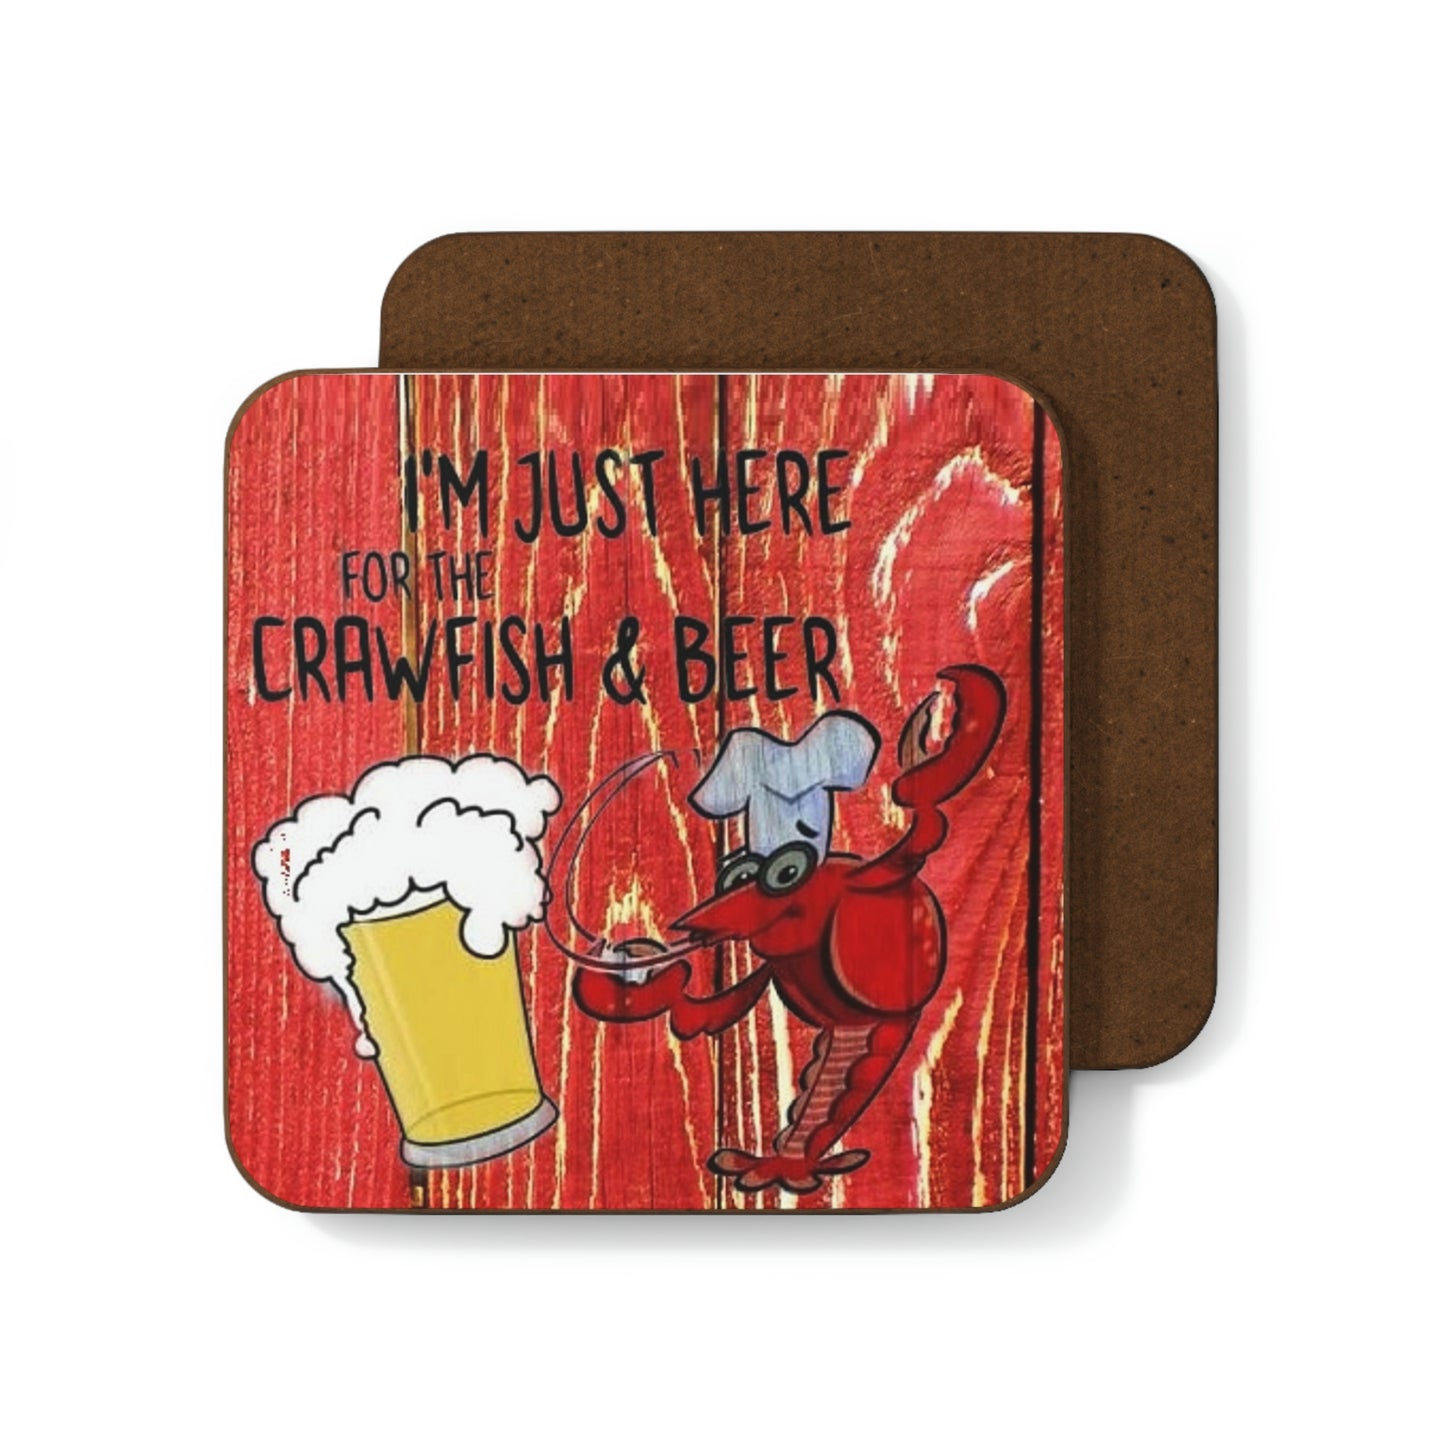 Crawfish and Beer Hardboard Back Coaster